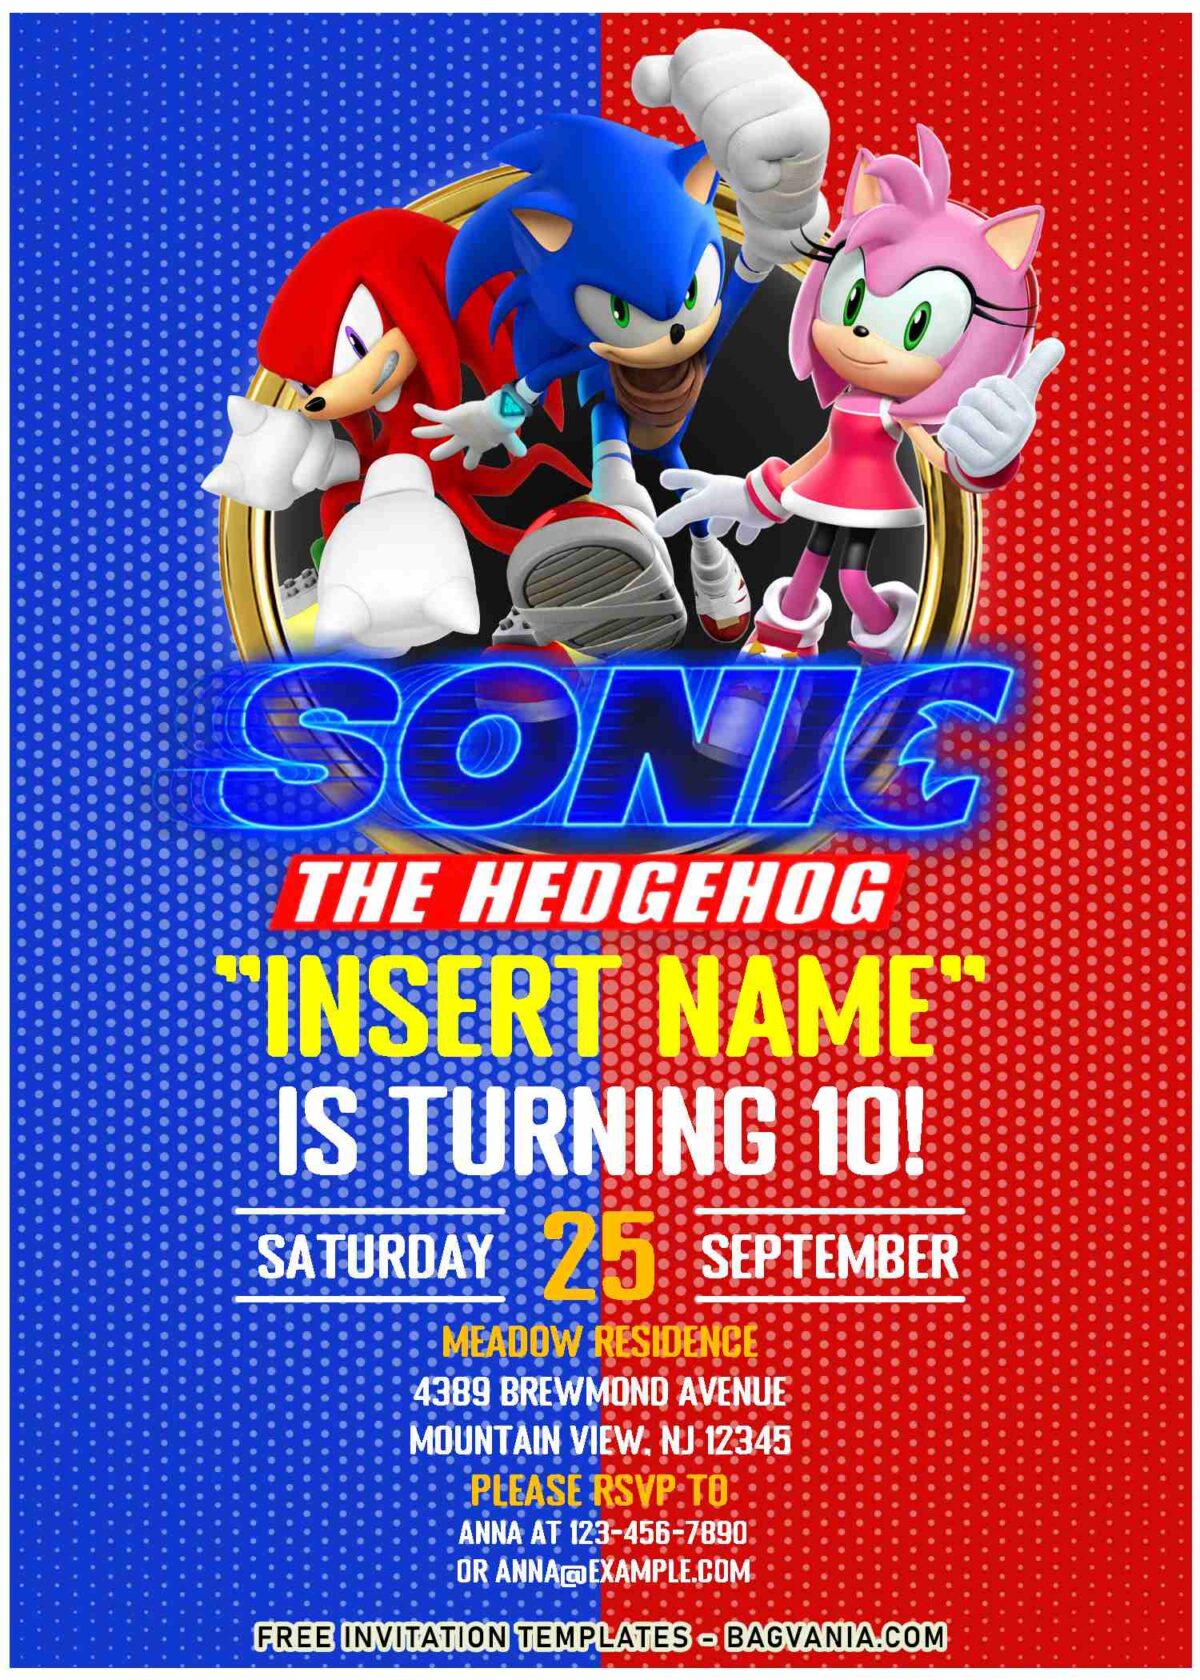 (Free Editable PDF) Sonic The Hedgehog Movie Themed Birthday Invitation Templates with halftone background